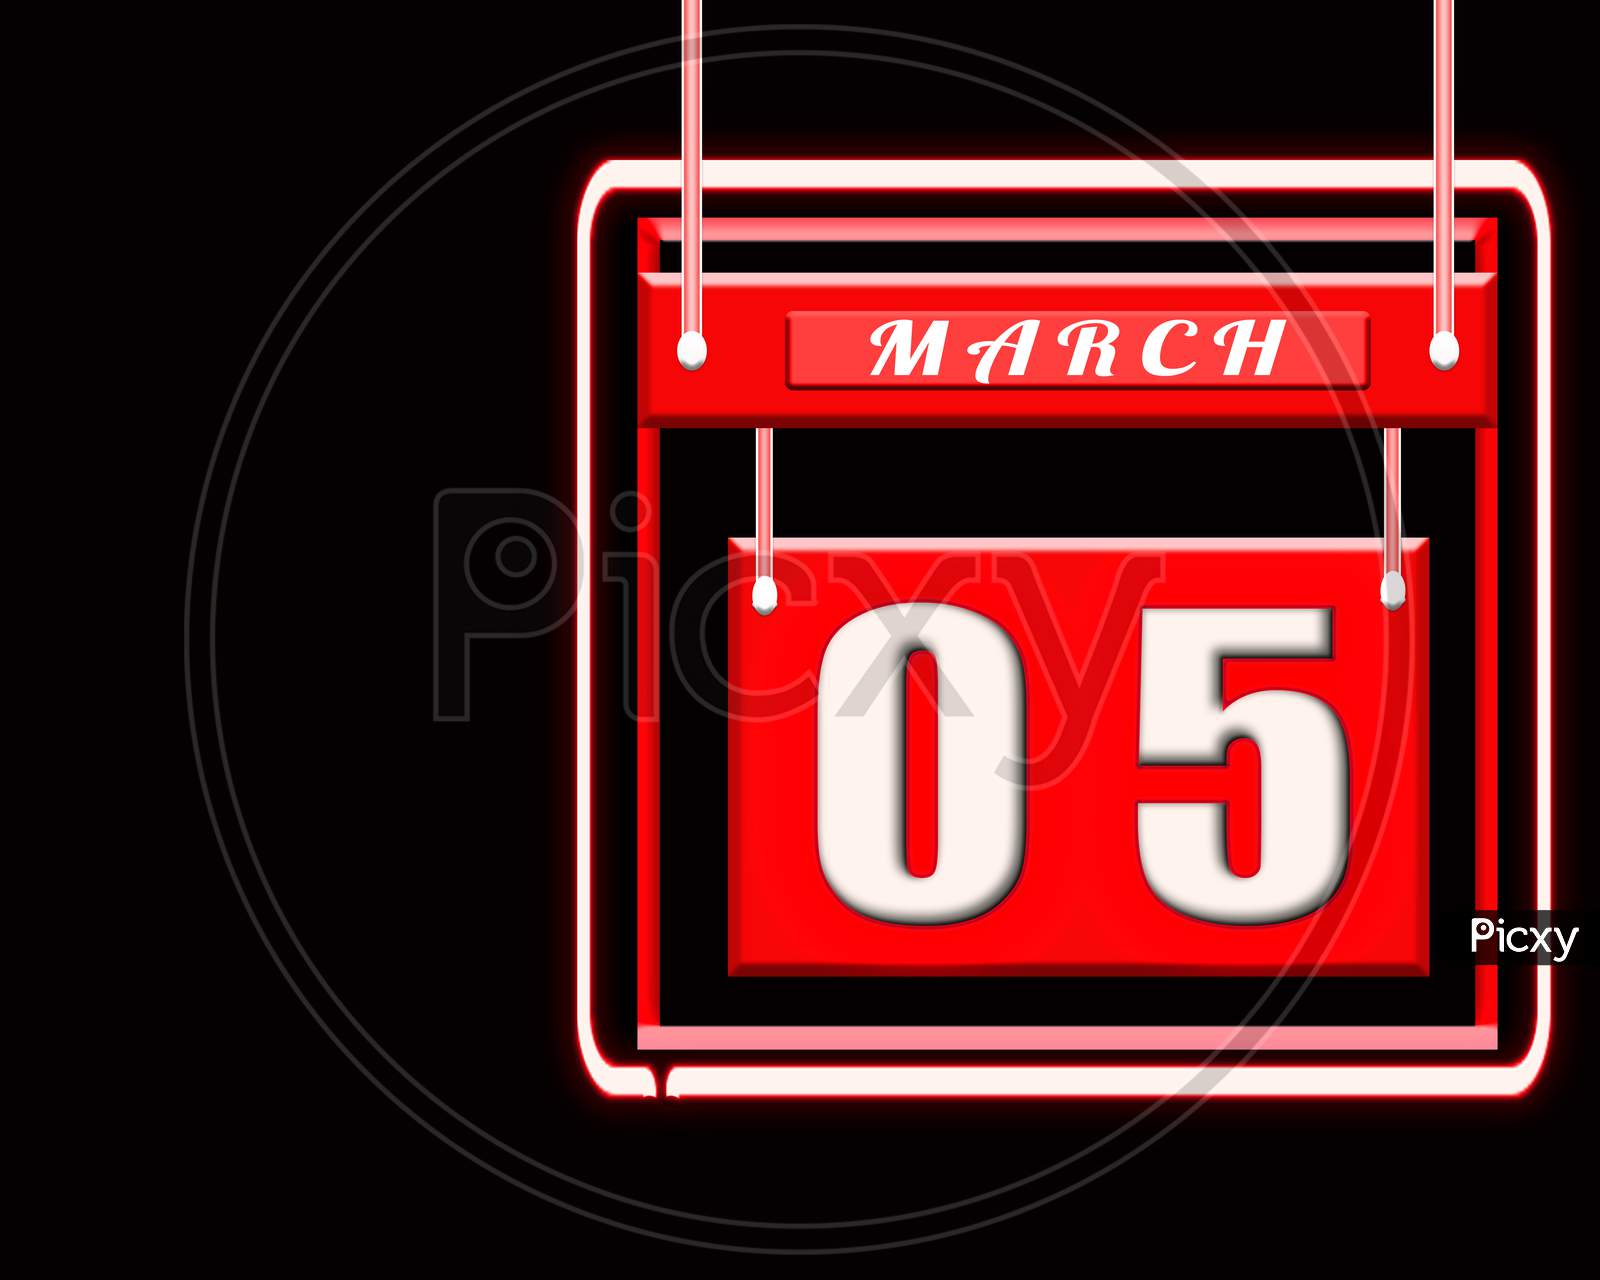 5 March, Red Calendar On Black Backgrand